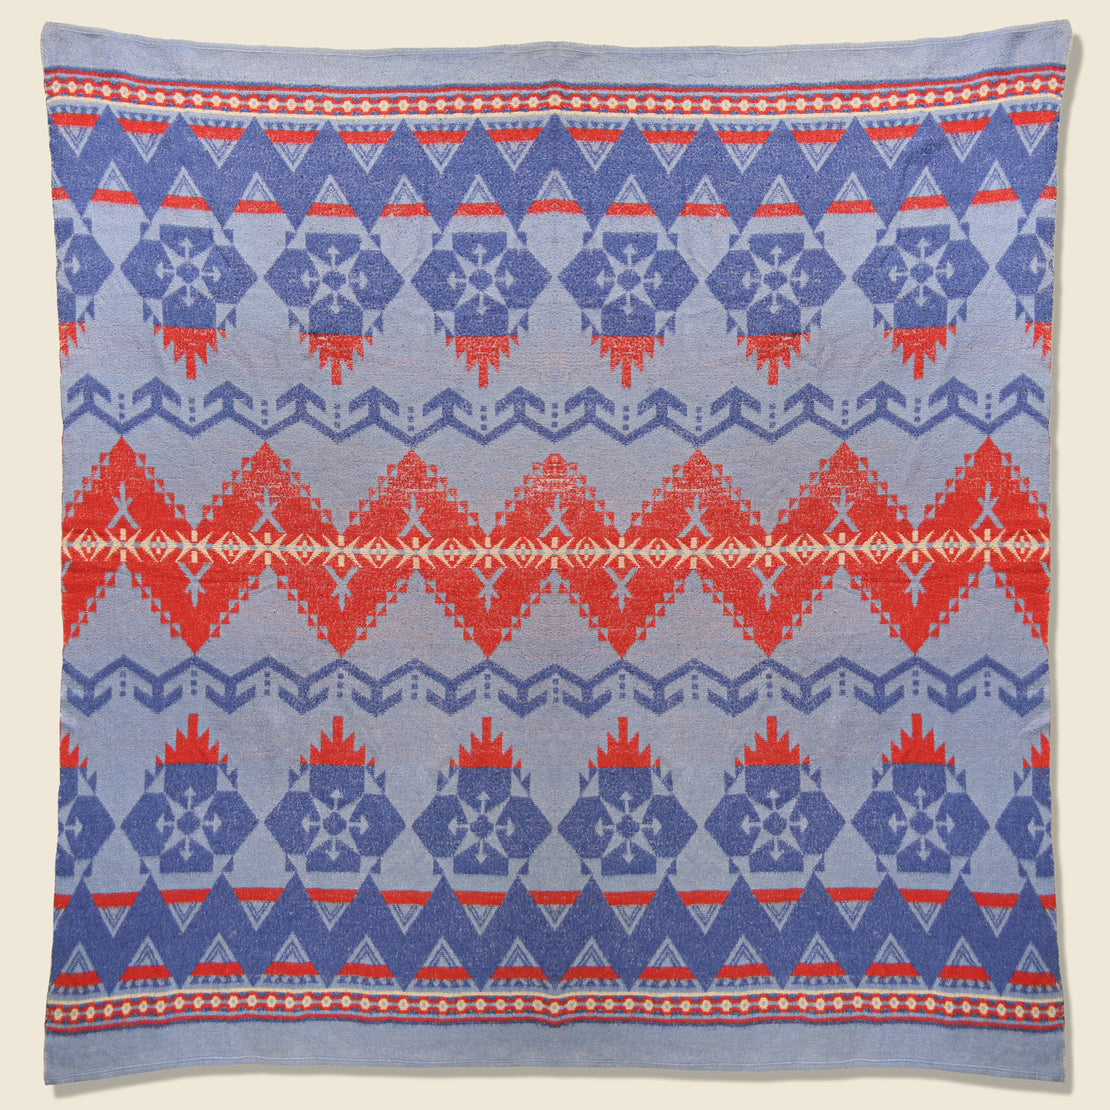 Flannel Camp Blanket - Blue/Red